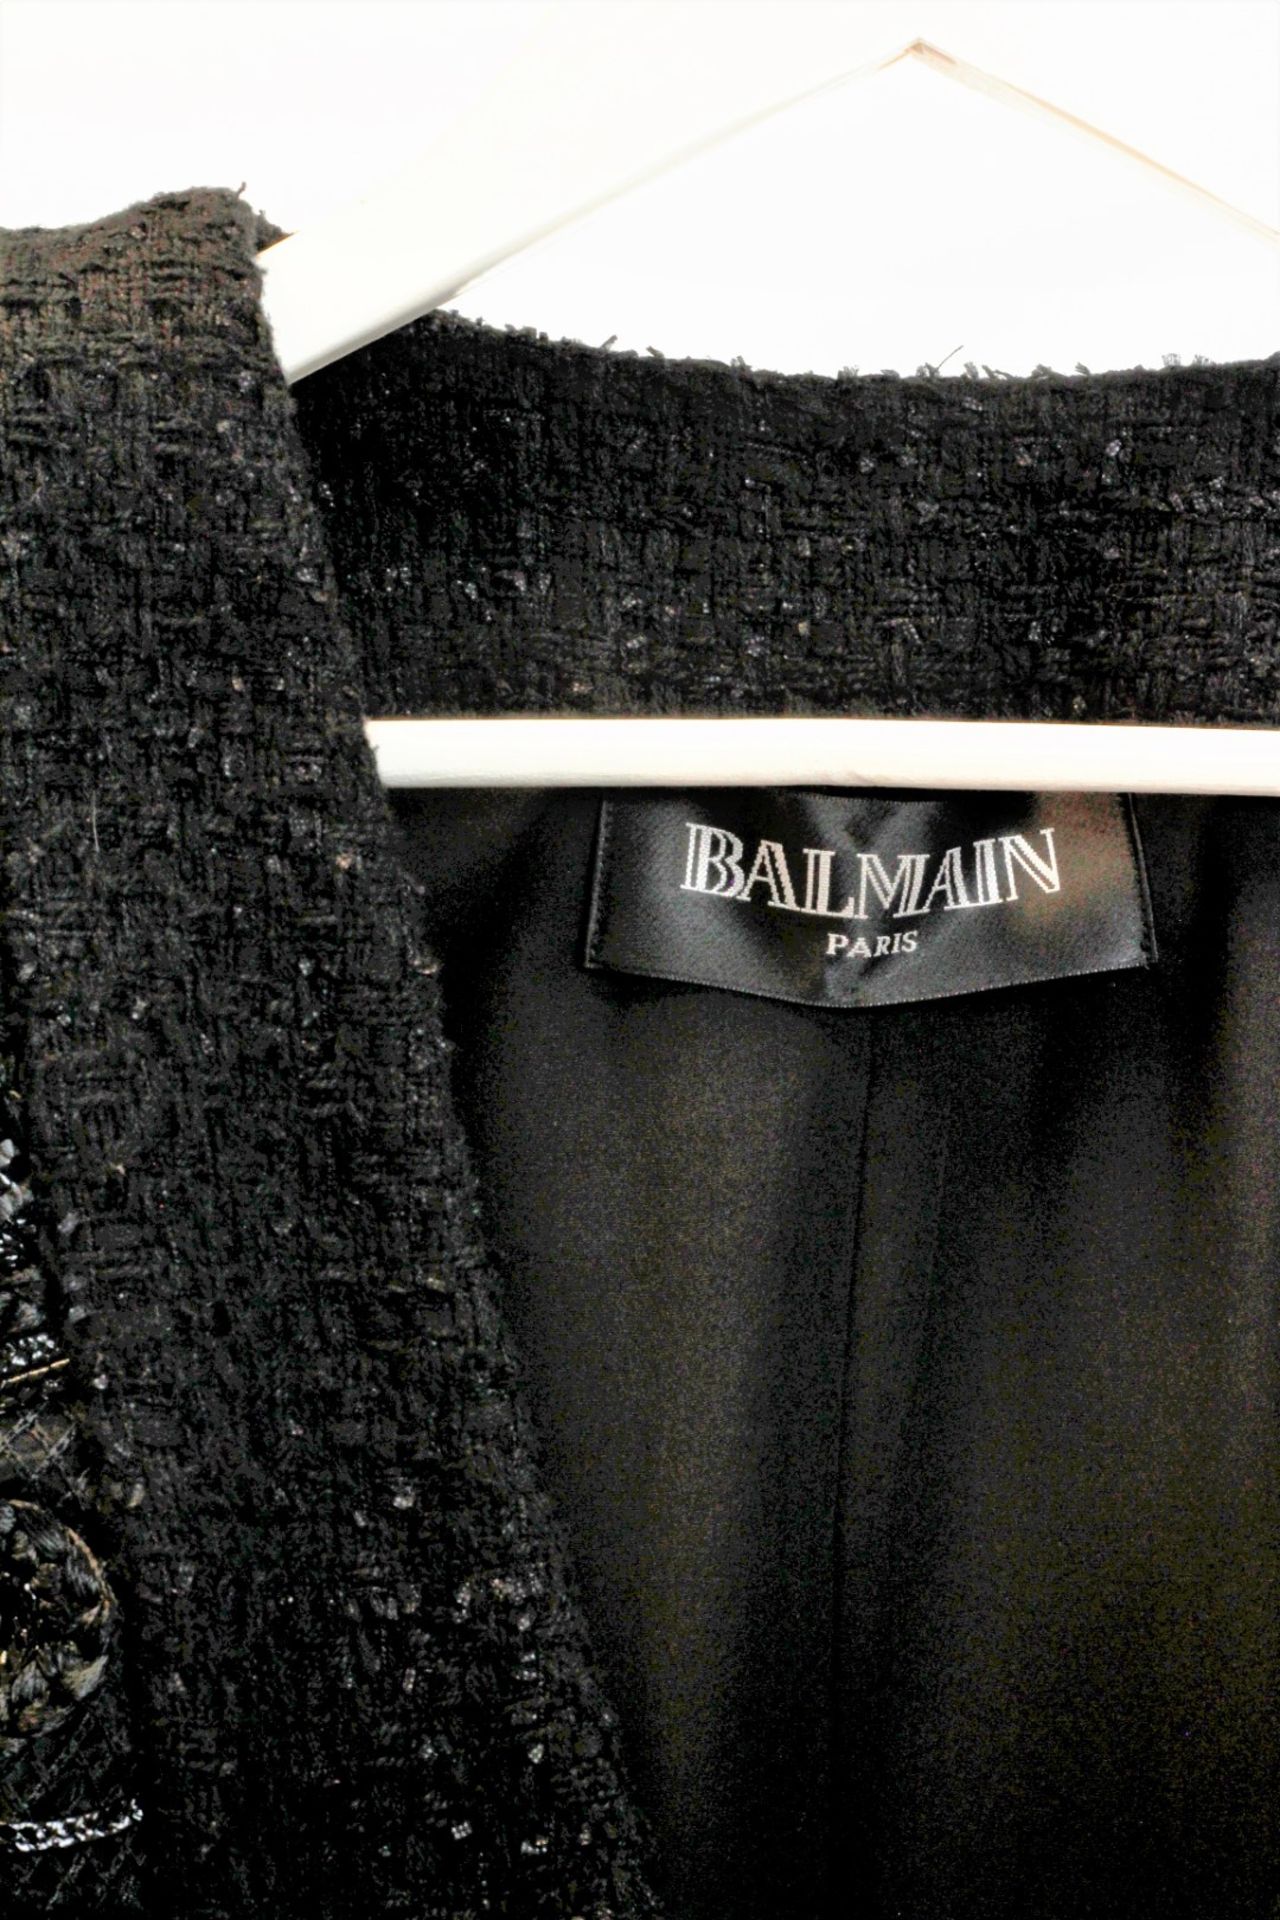 1 x Balmain Black Jacket - Size: 14 - Material: Body 48% Cotton, 27% Acrylic, 19% Nylon, 6% Viscose. - Image 18 of 18